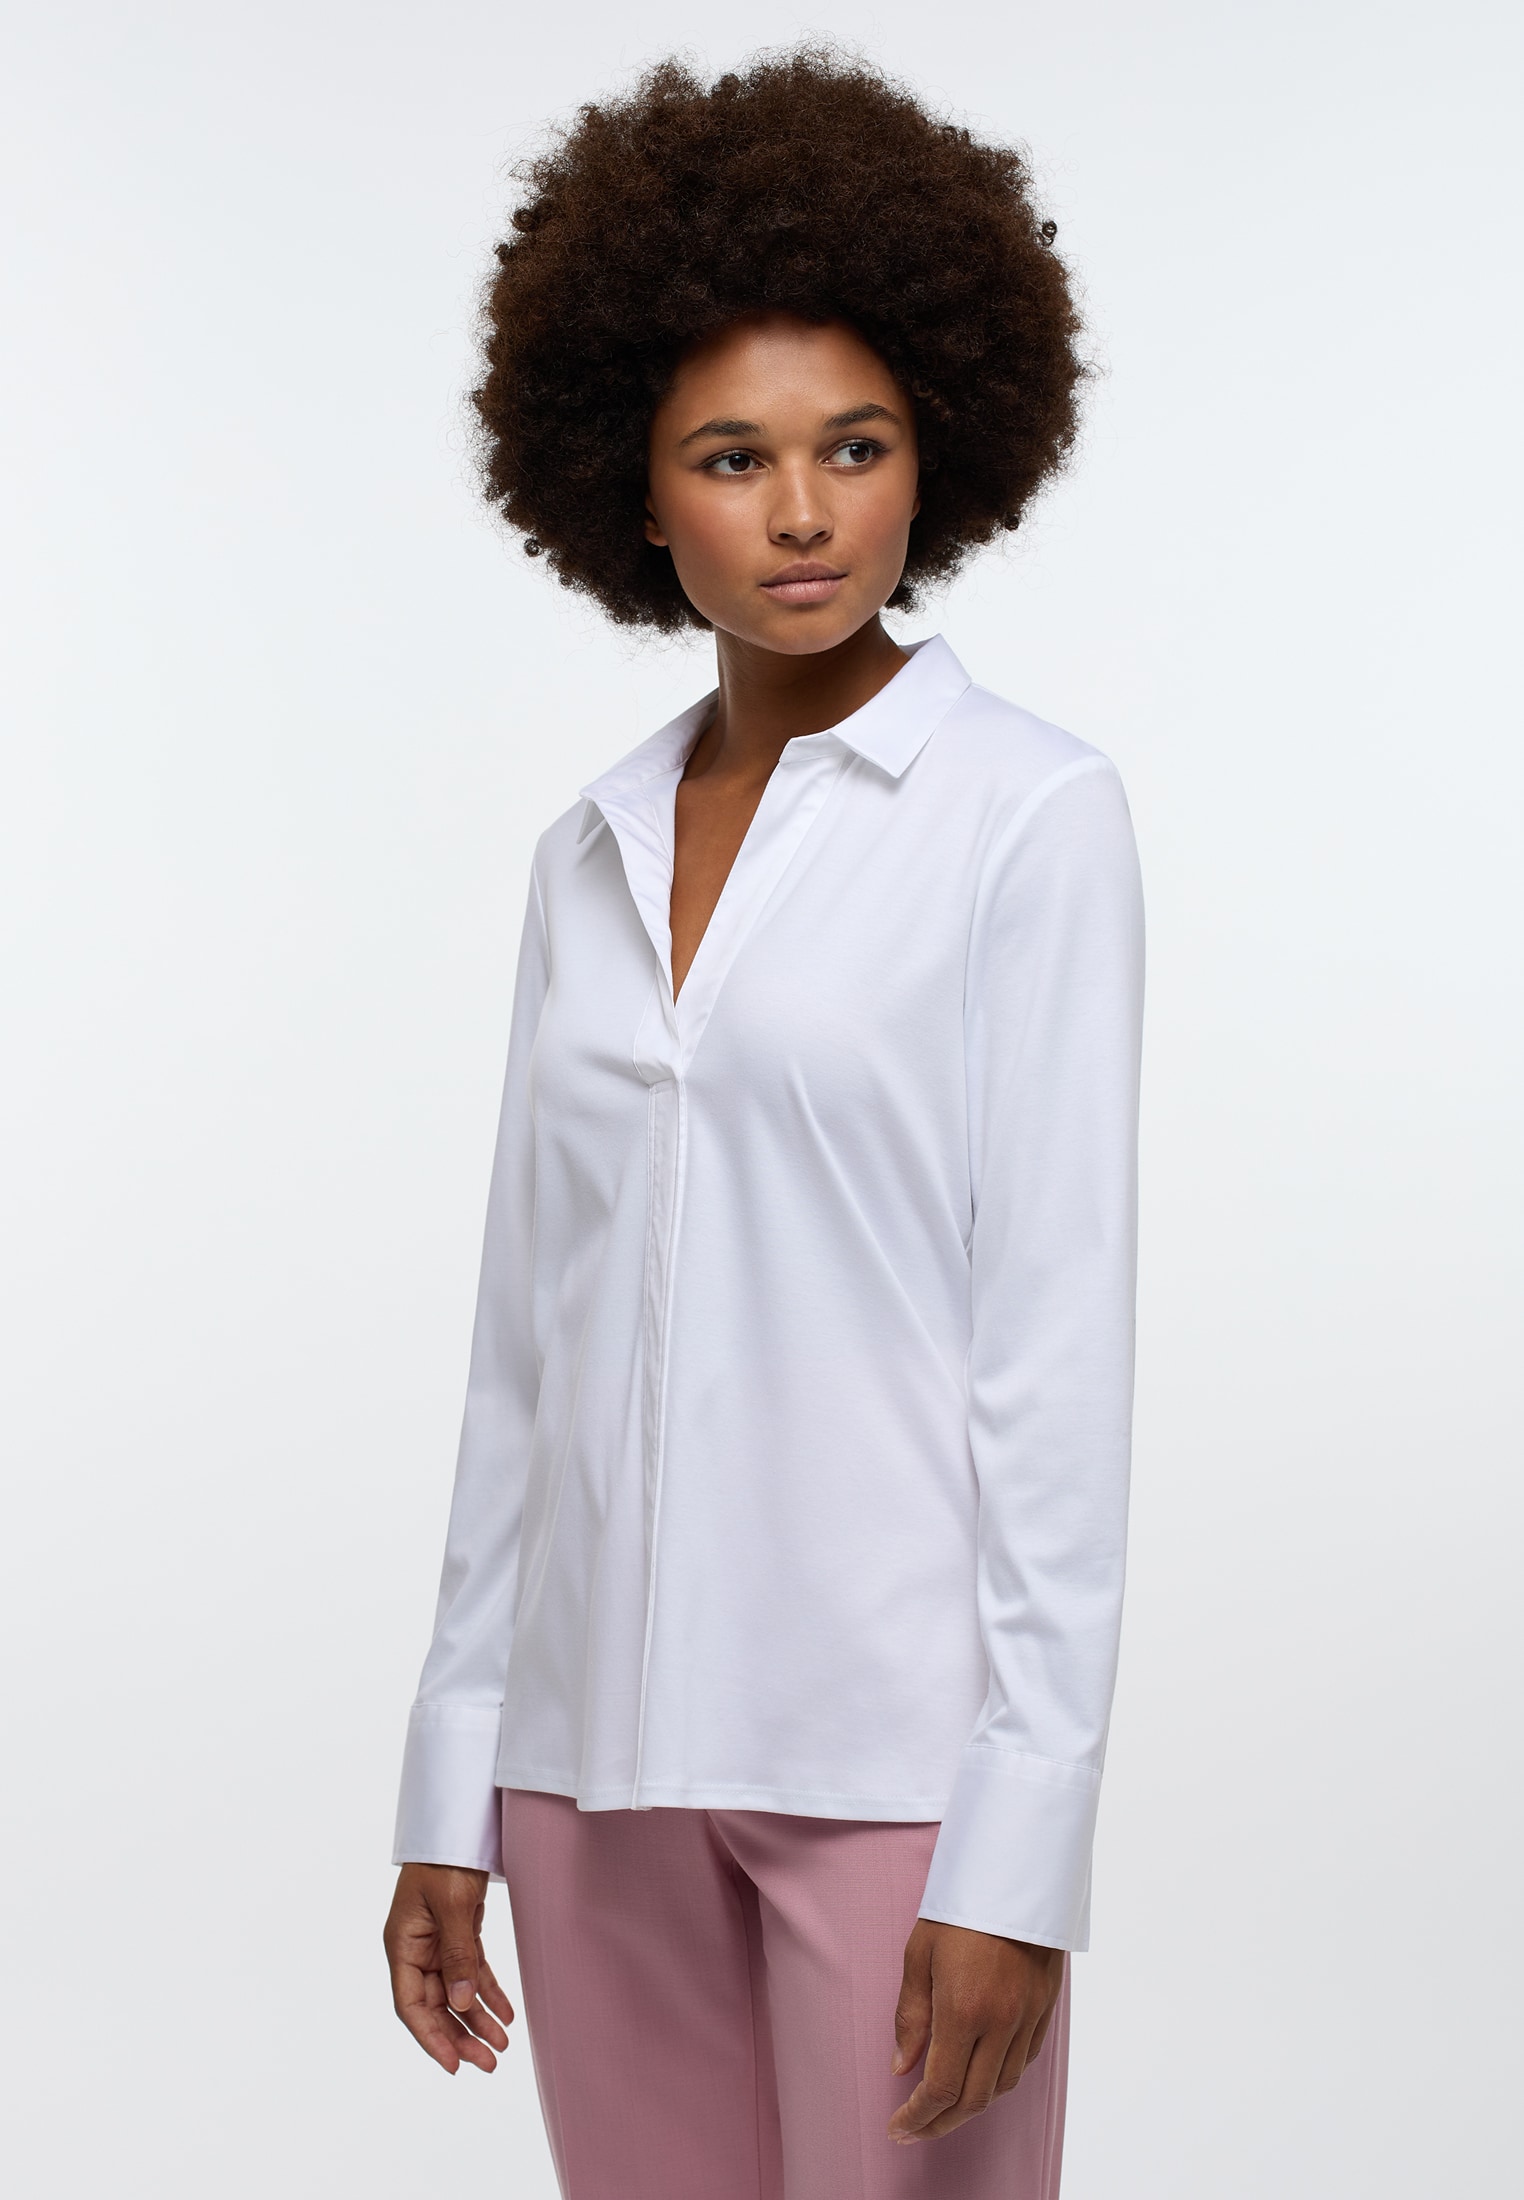 in 2BL04000-00-01-40-1/1 sleeve Jersey Shirt 40 | | | | long white plain white Blouse